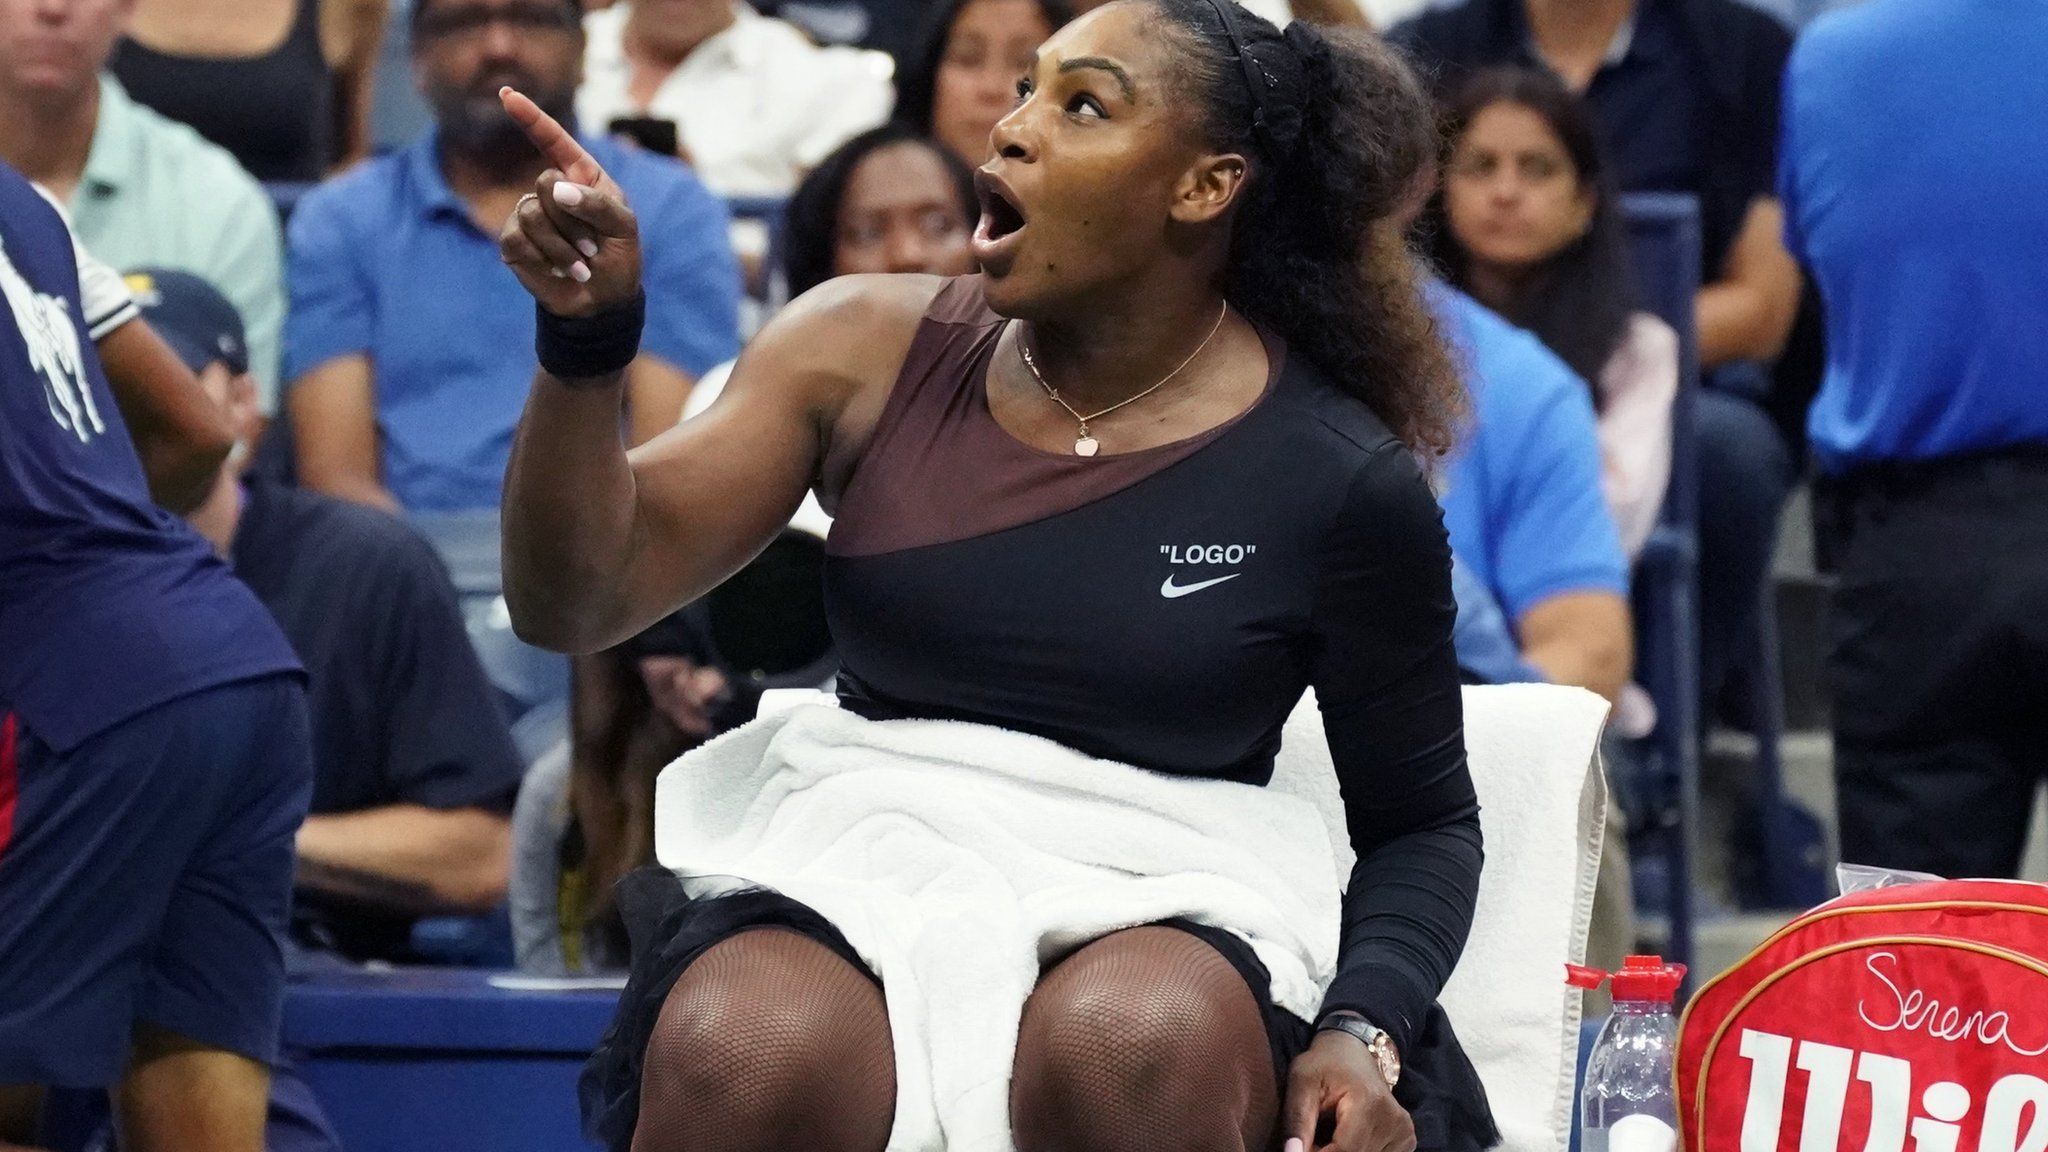 Serena Williams: Herald Sun front page defends cartoon - BBC News